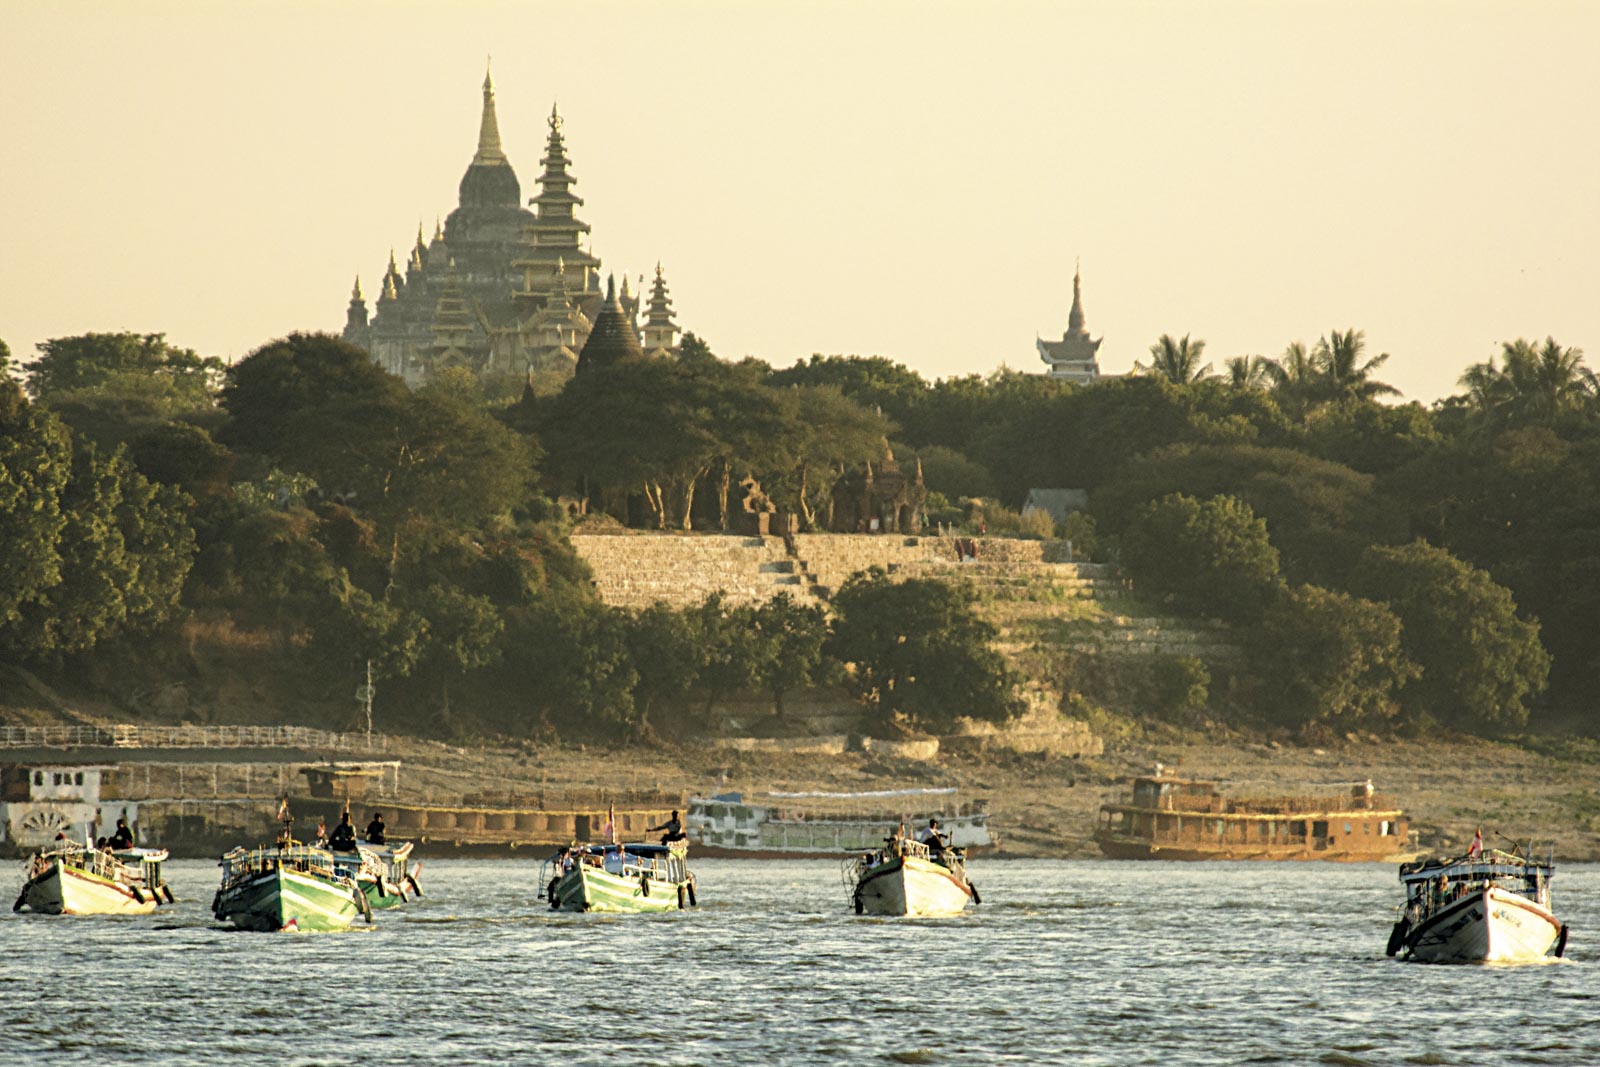 Boats sail on the Irrawaddy River along the Bagan, Myanmar